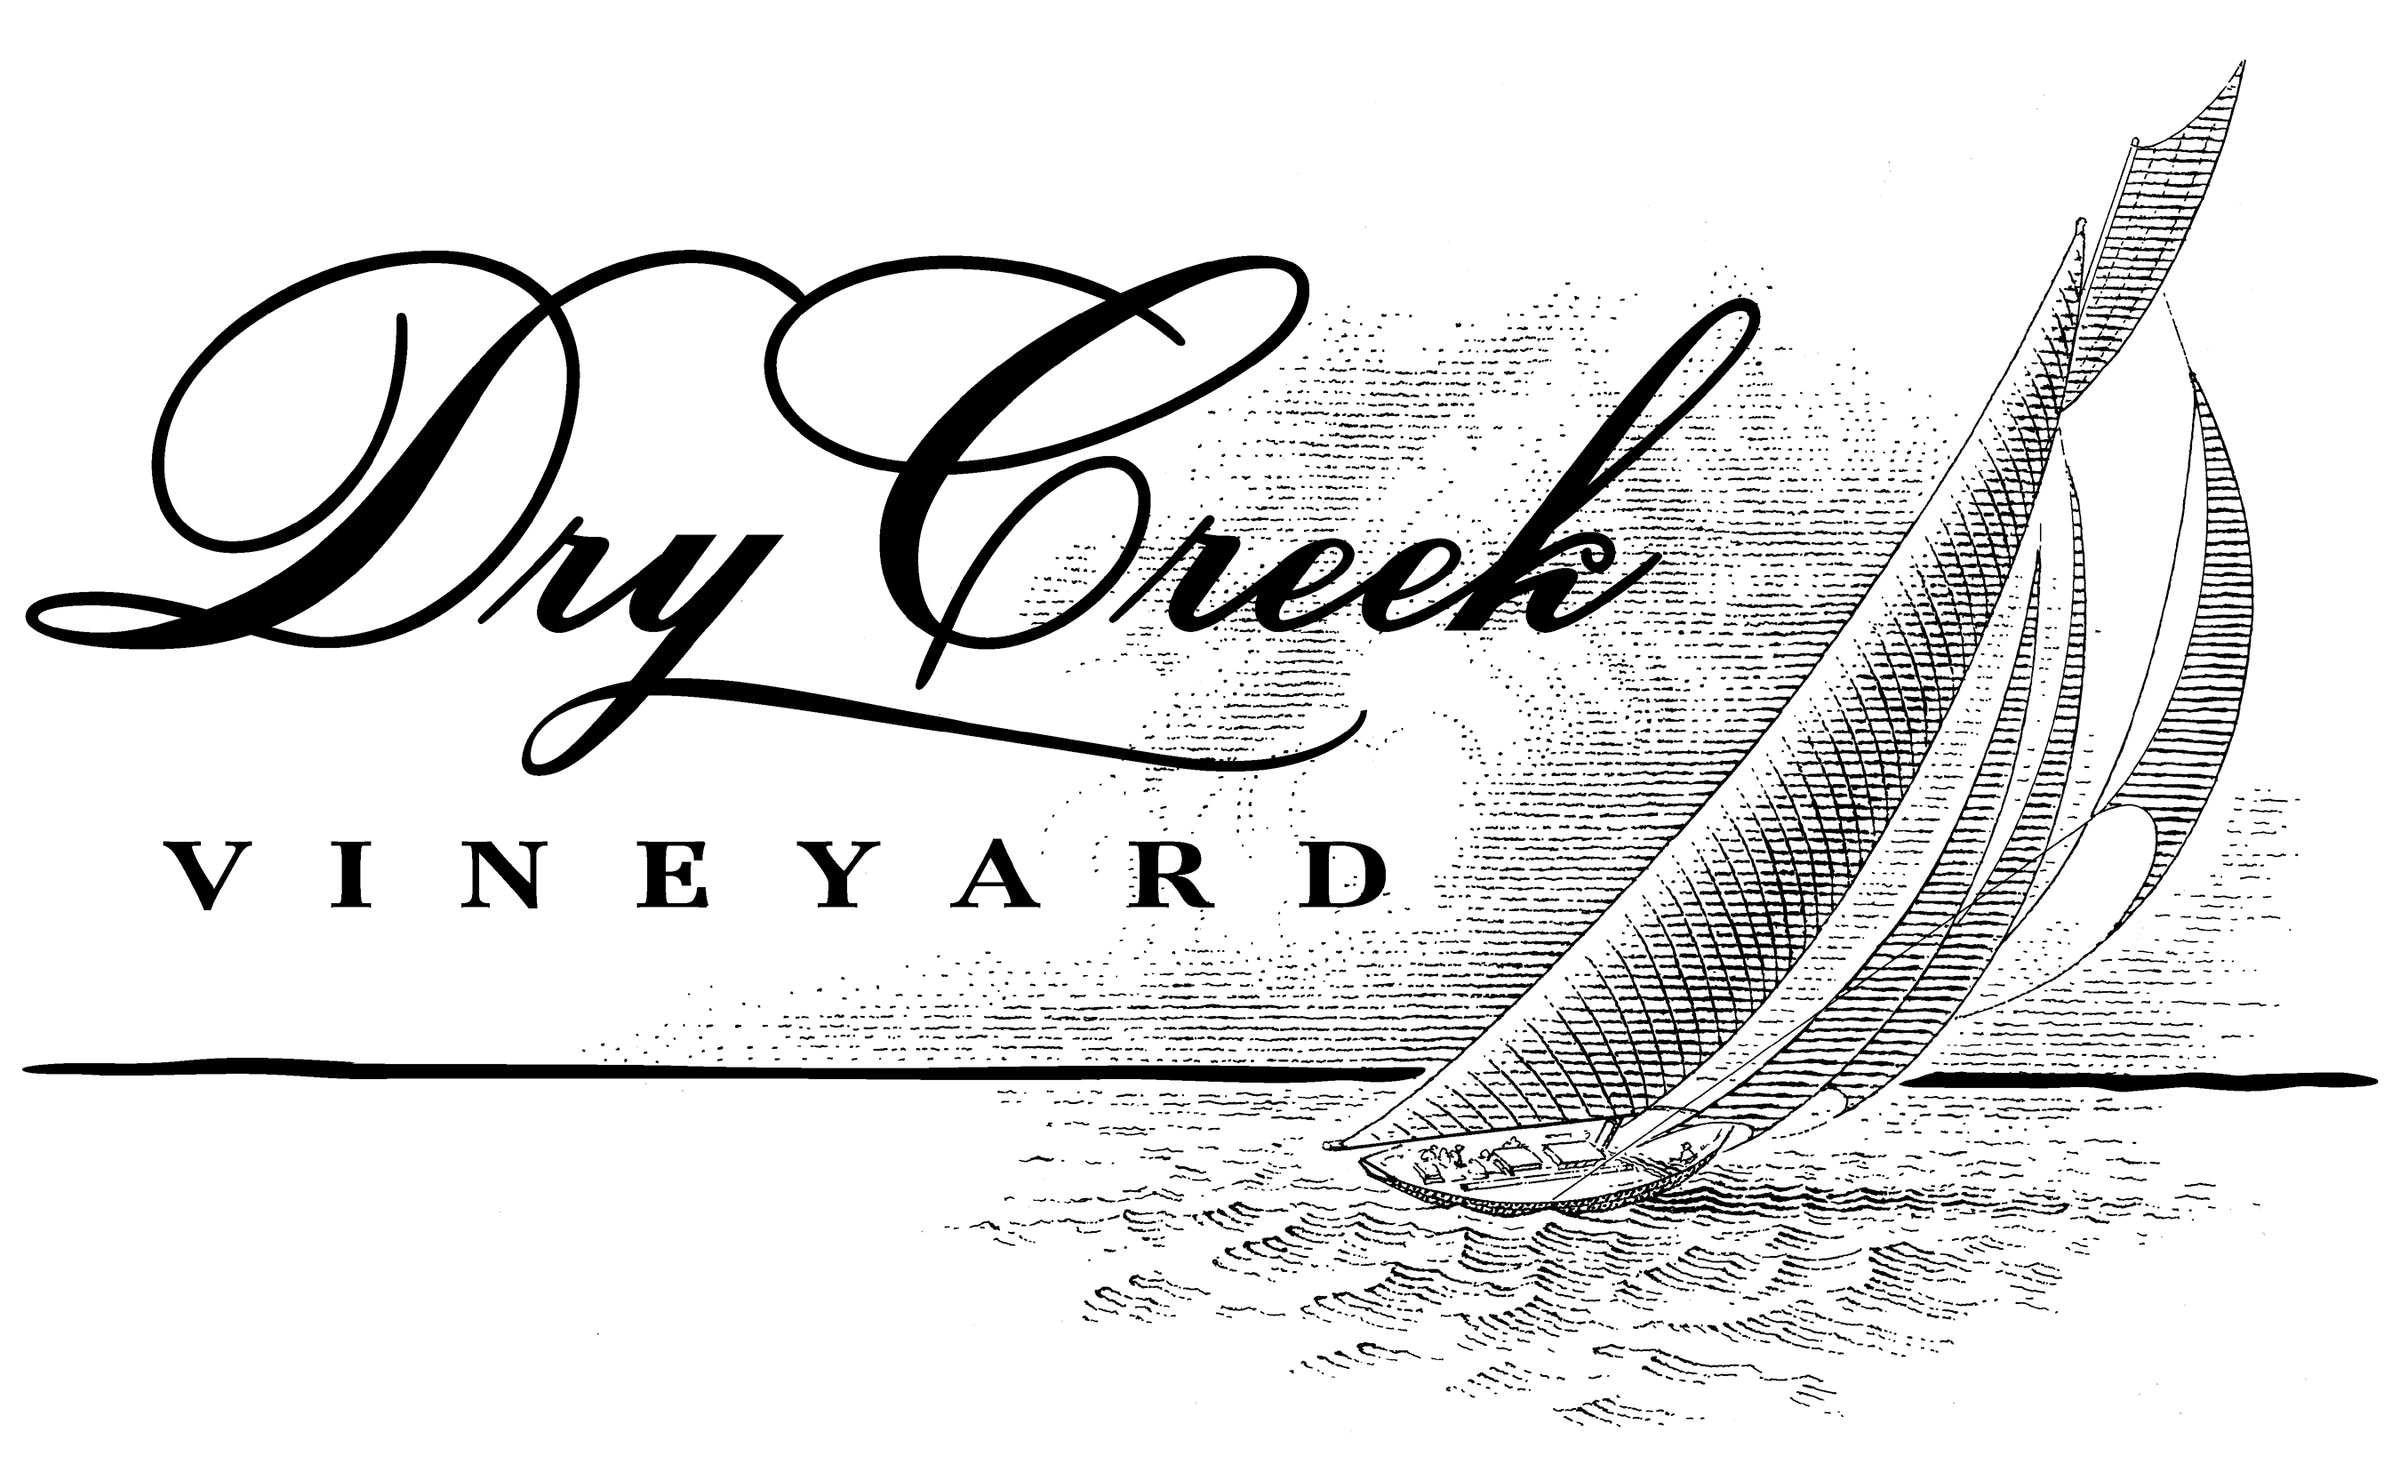 Dry Creek Vineyard